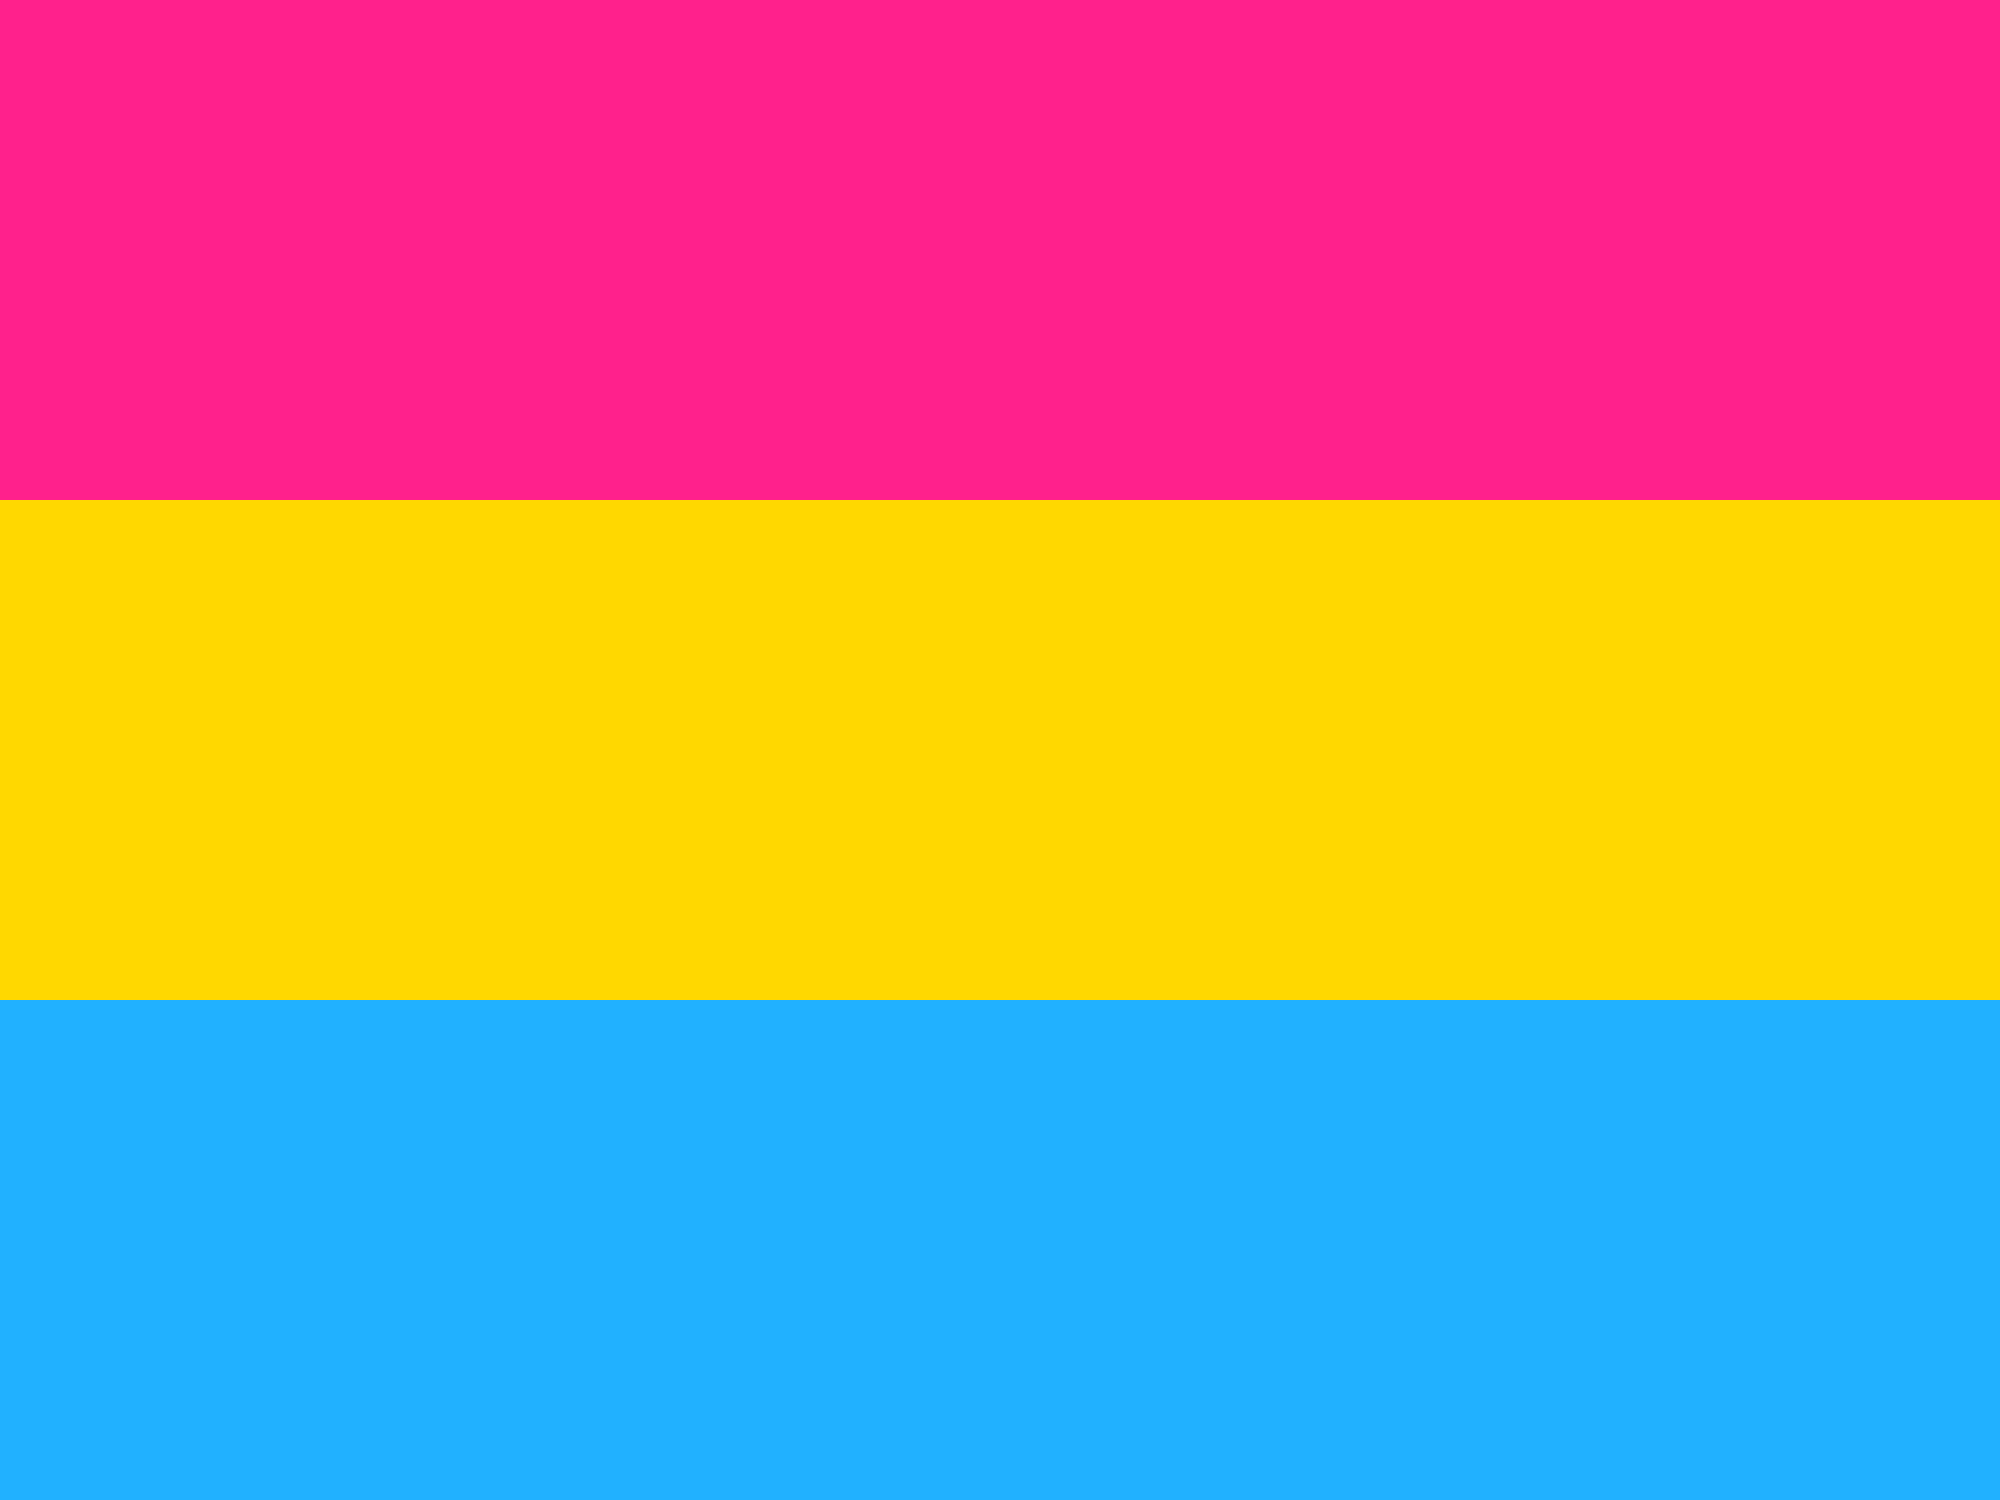 pan and gender fluid flag